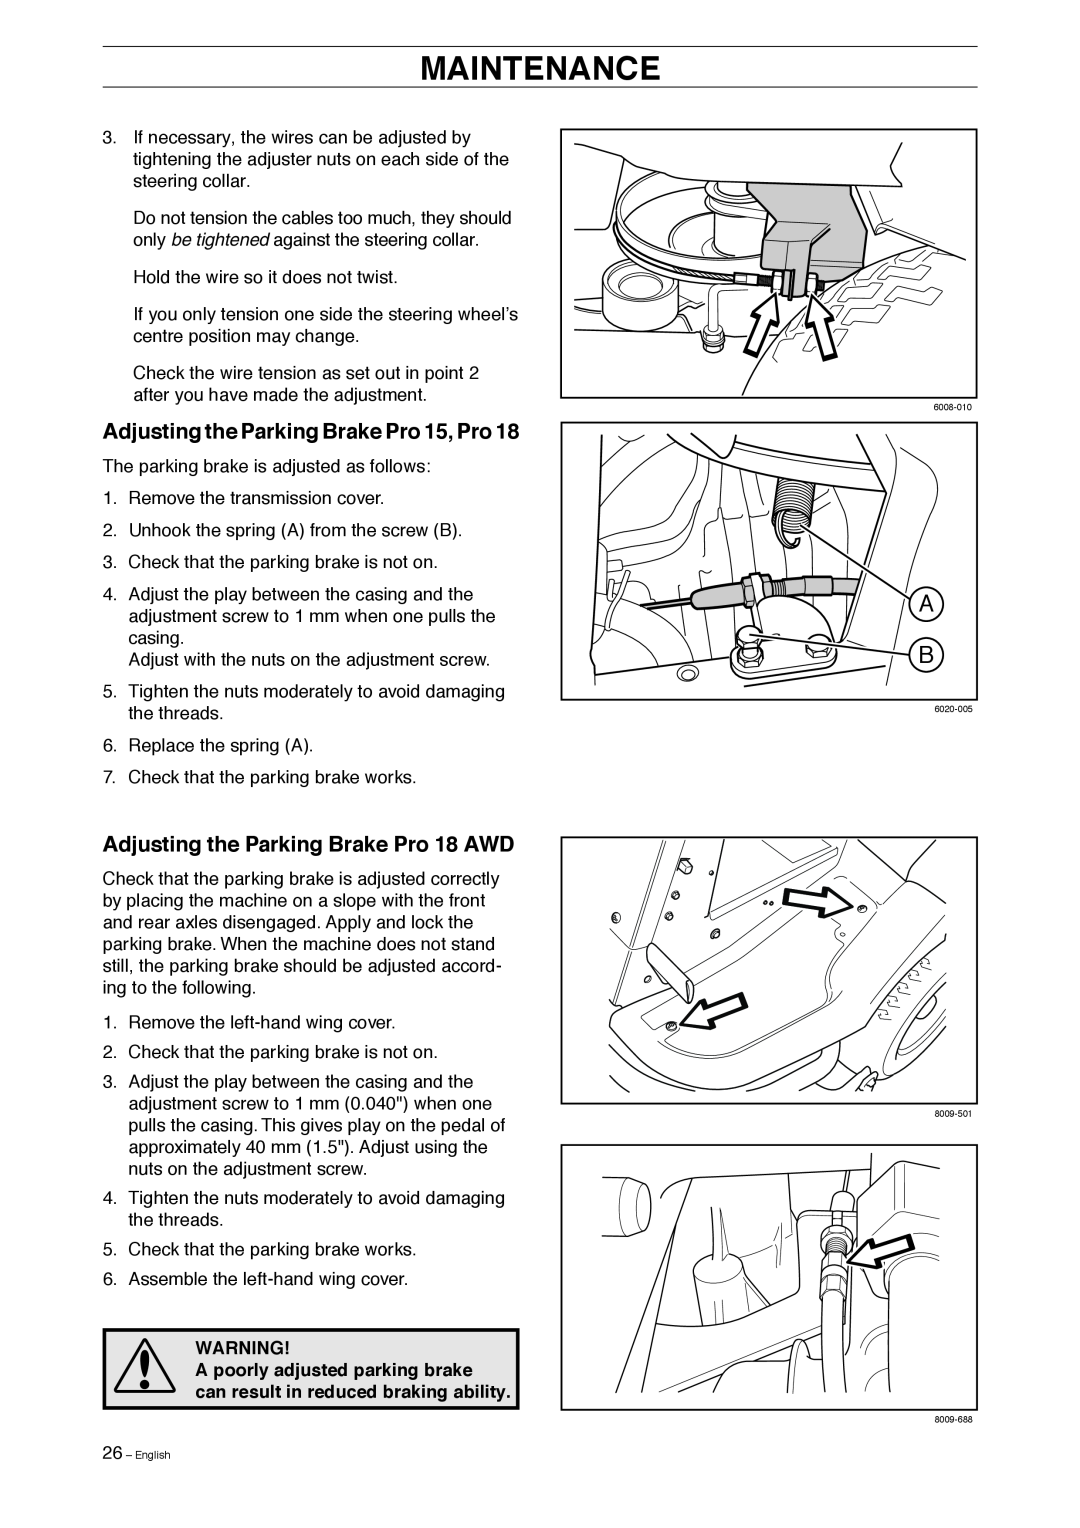 Husqvarna manual Adjusting the Parking Brake Pro 15, Pro, Adjusting the Parking Brake Pro 18 AWD, Maintenance 